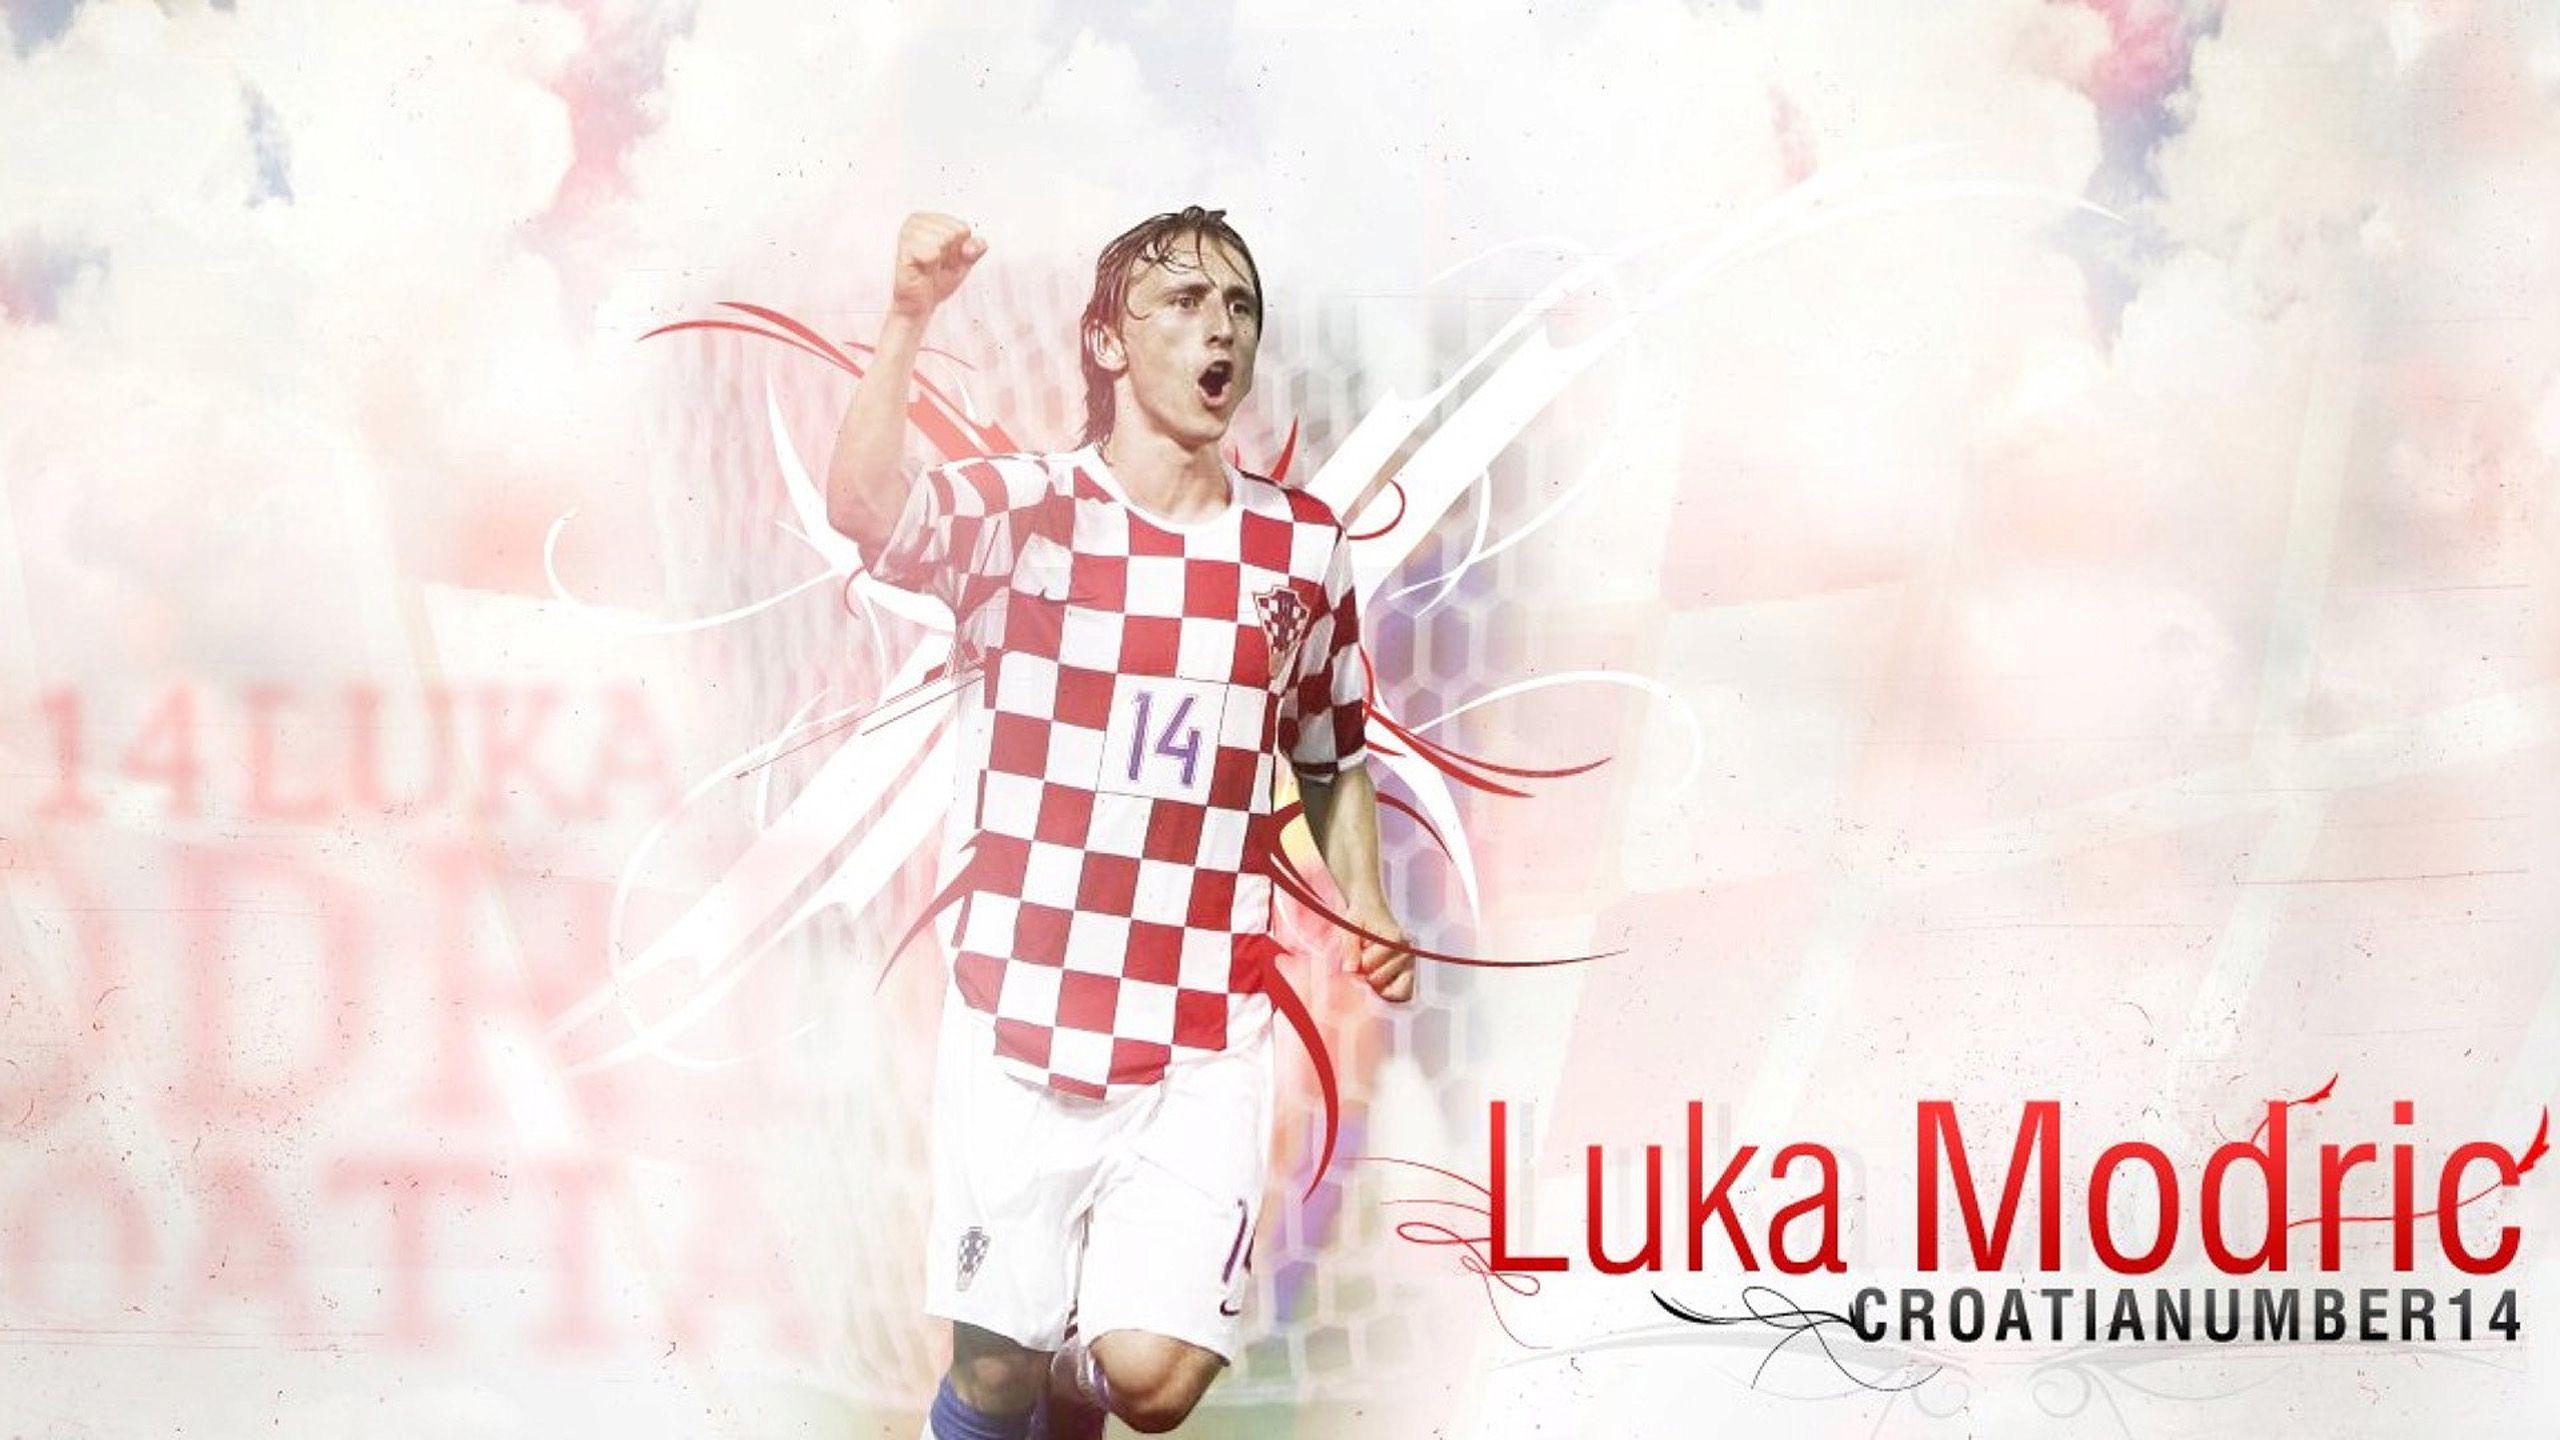 Luka Modrić is a Croatian professional footballer who plays